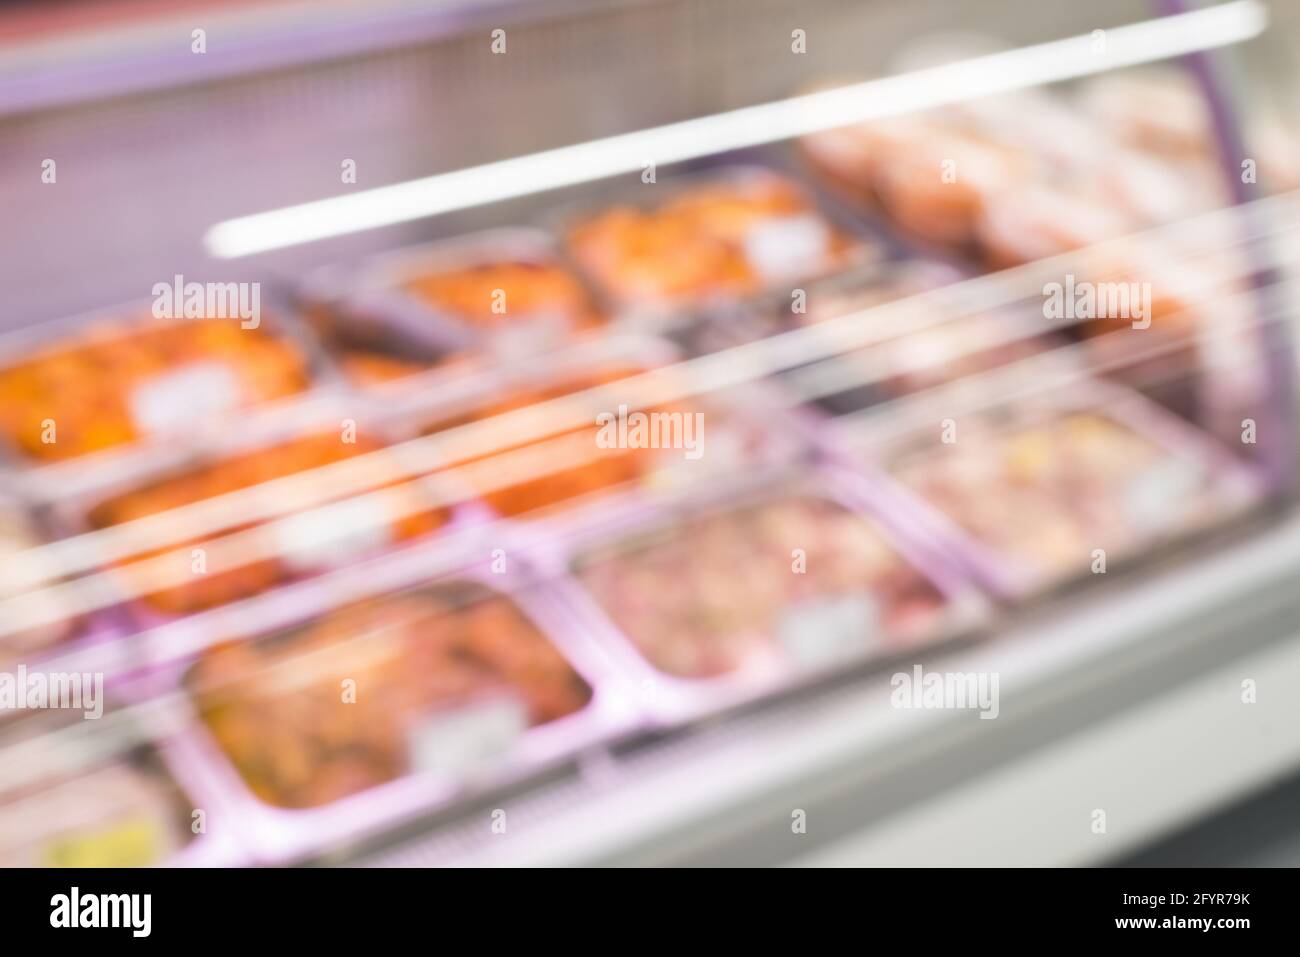 defocused meat refrigerated display case Stock Photo